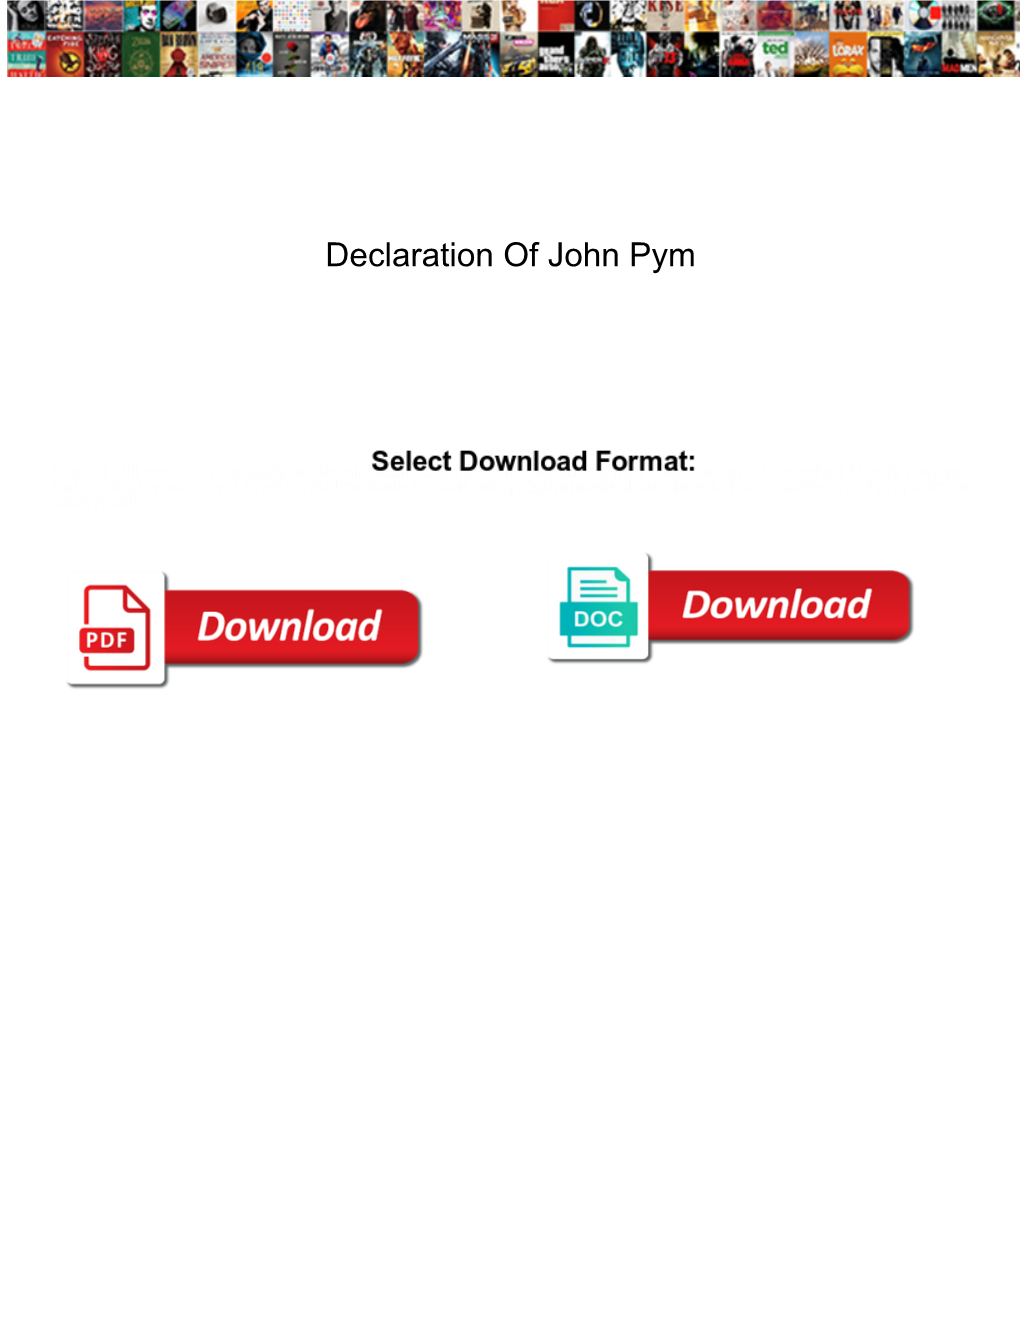 Declaration of John Pym